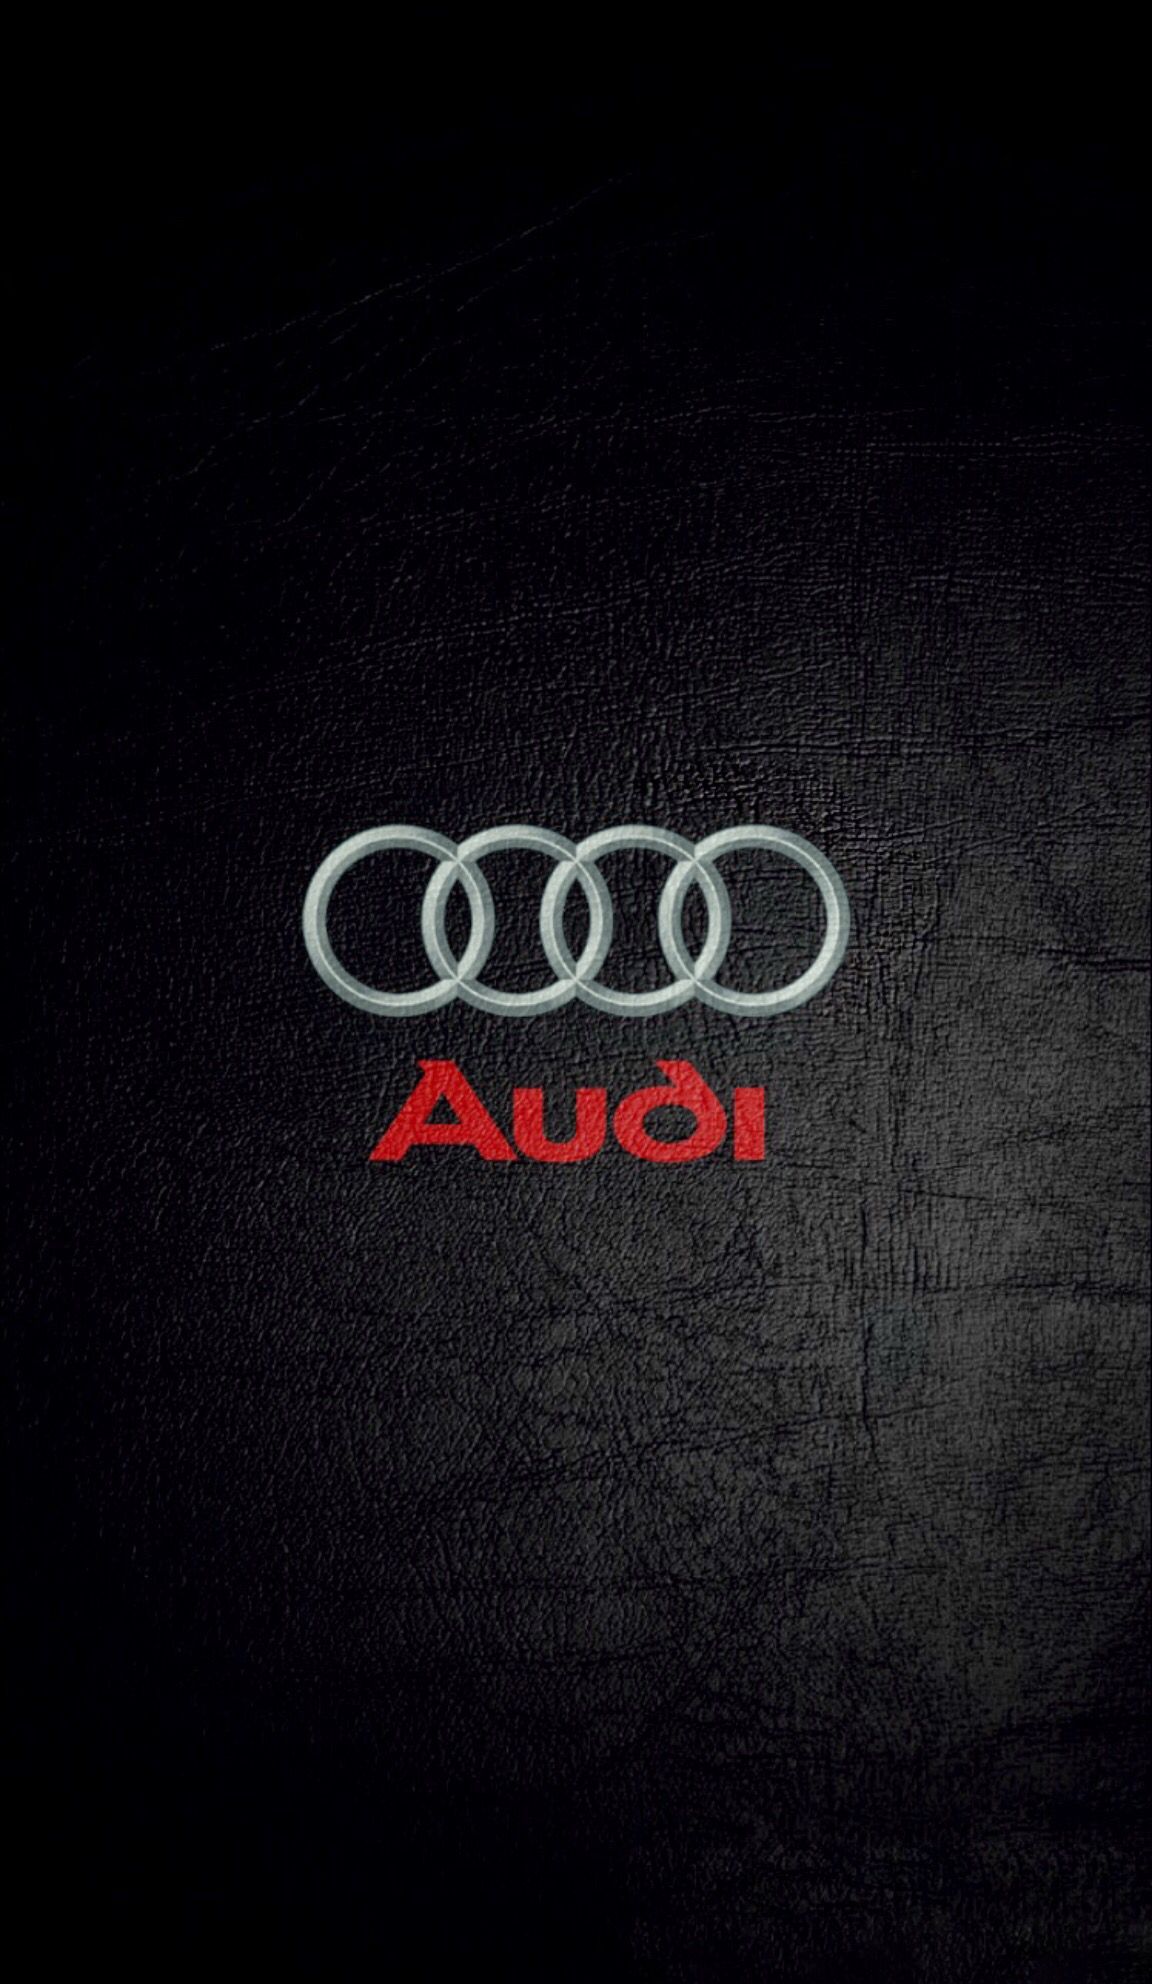 Audi Hintergrundbild 1152x1984. Audi Wallpaper IPhone. Hintergrundbilder Iphone, Audi, Bmw F31 Touring